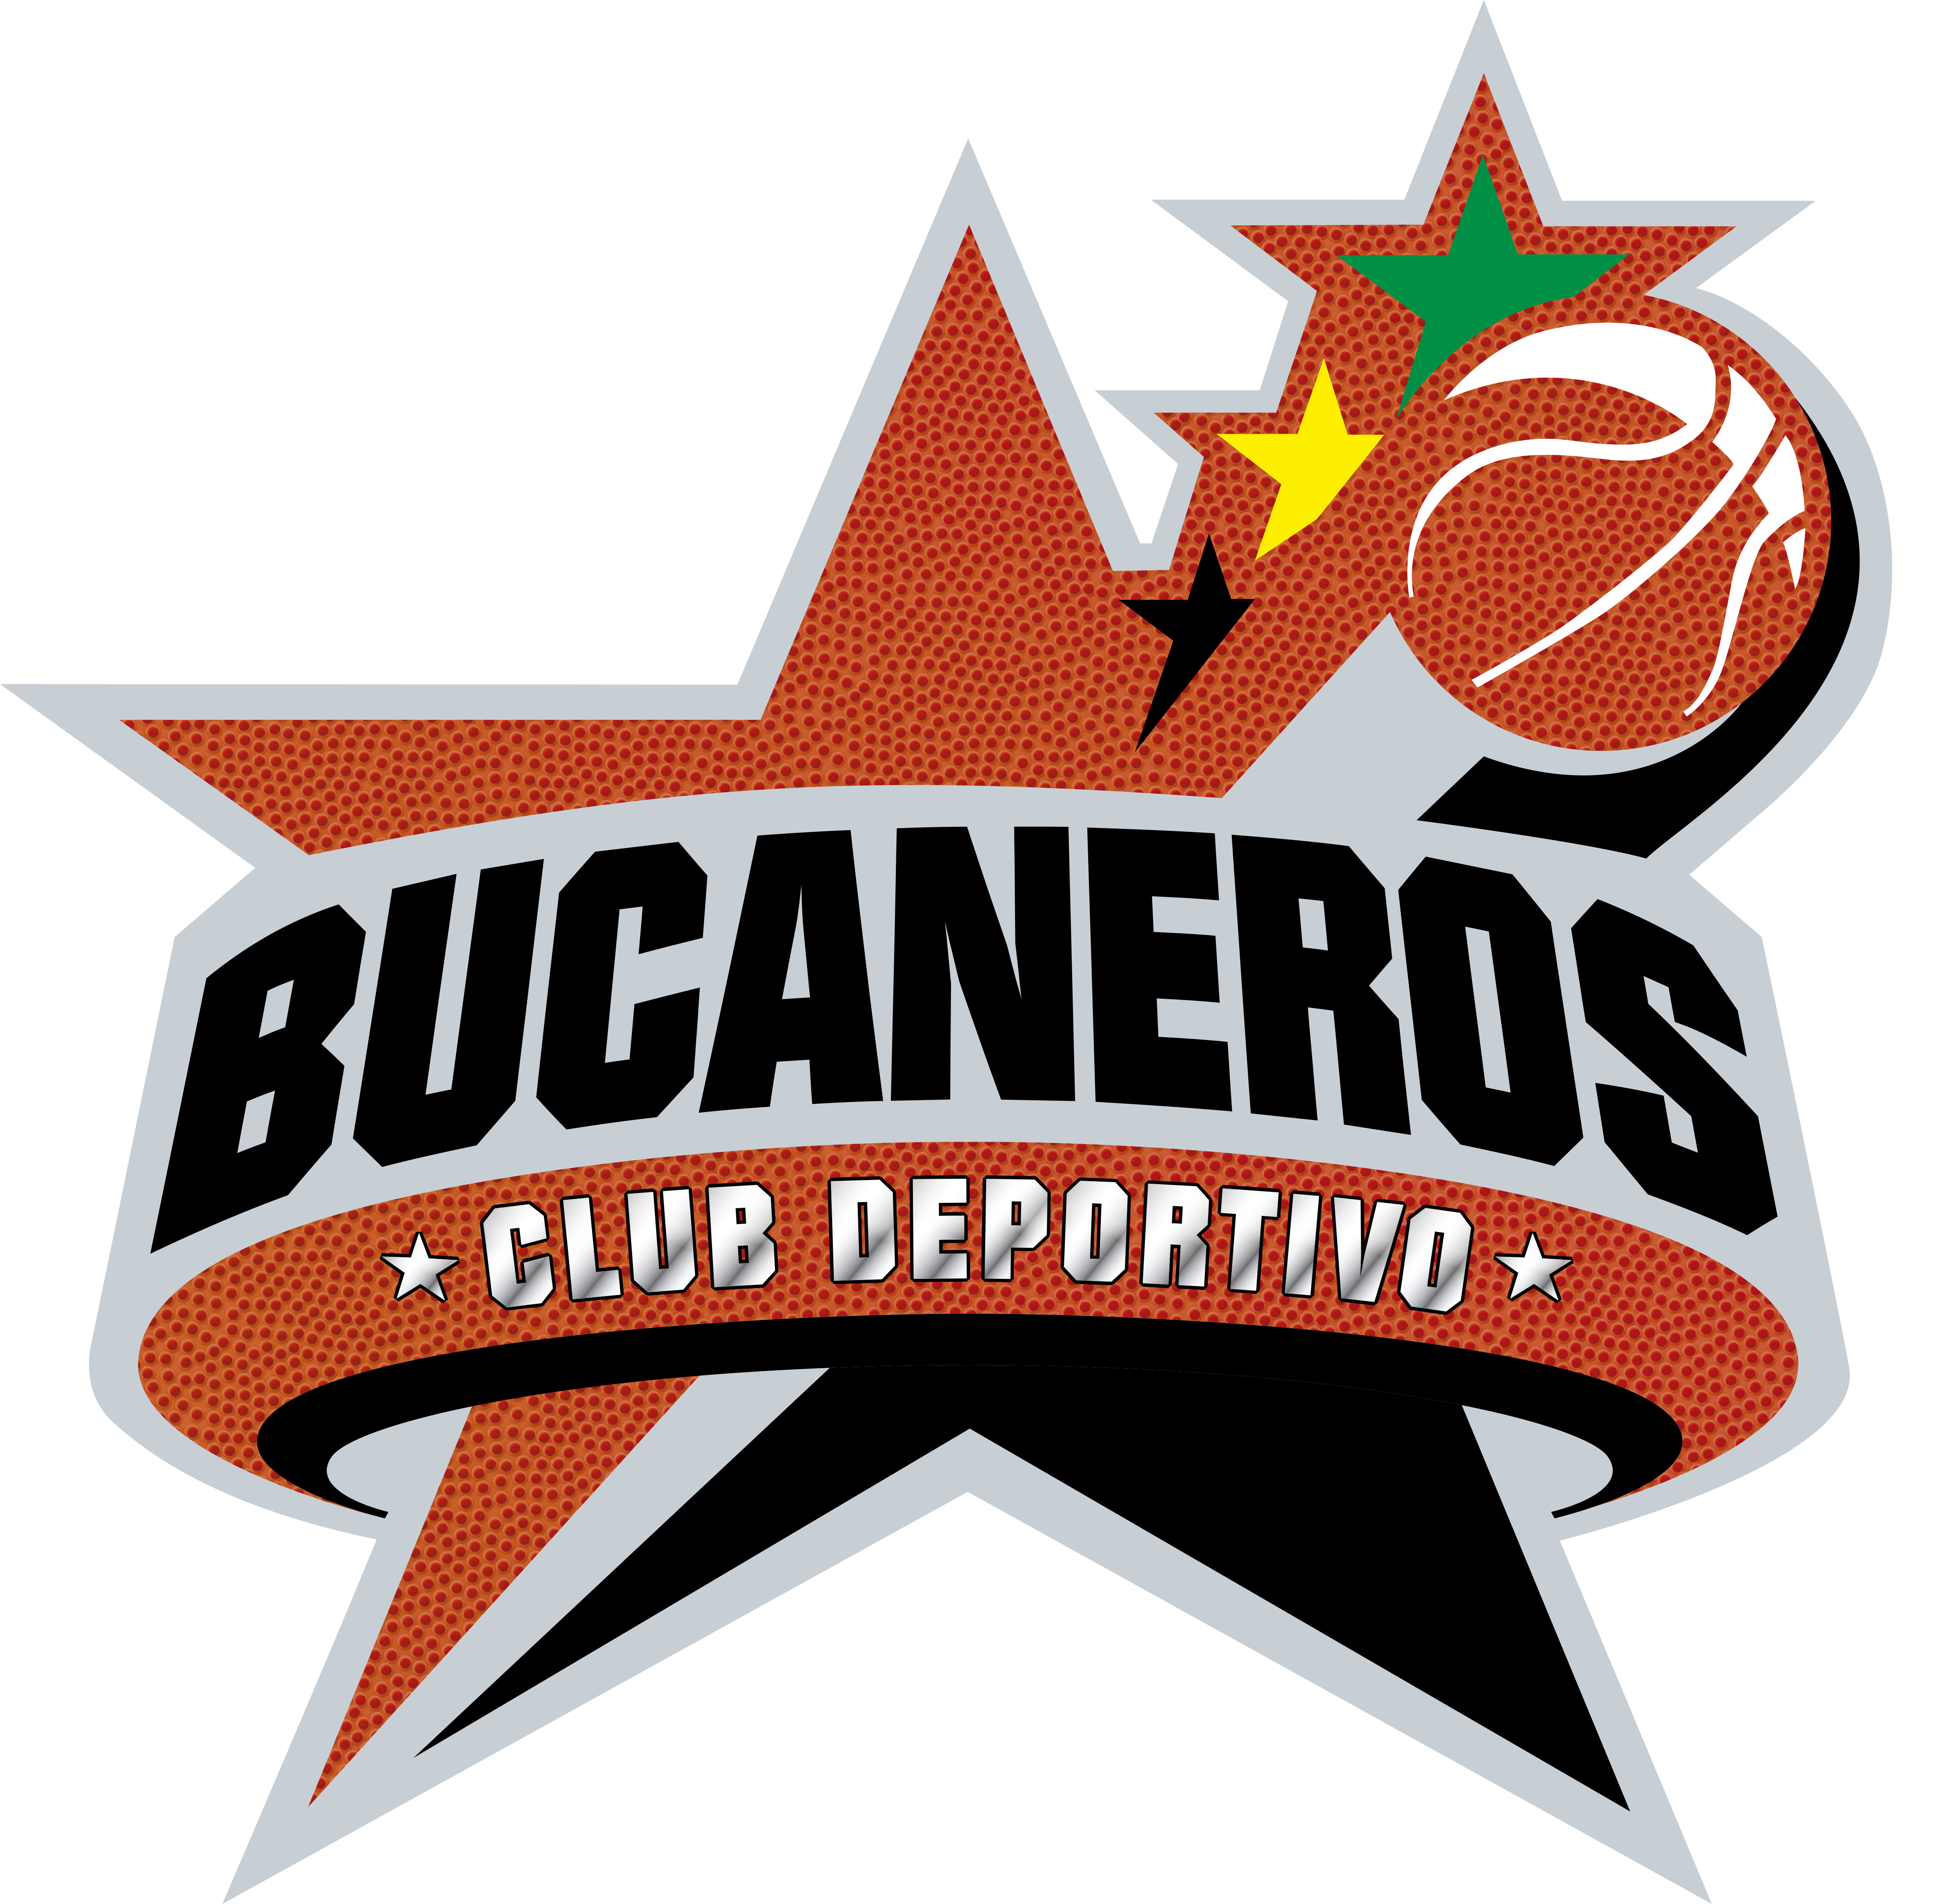 Club Deportivo Bucaneros